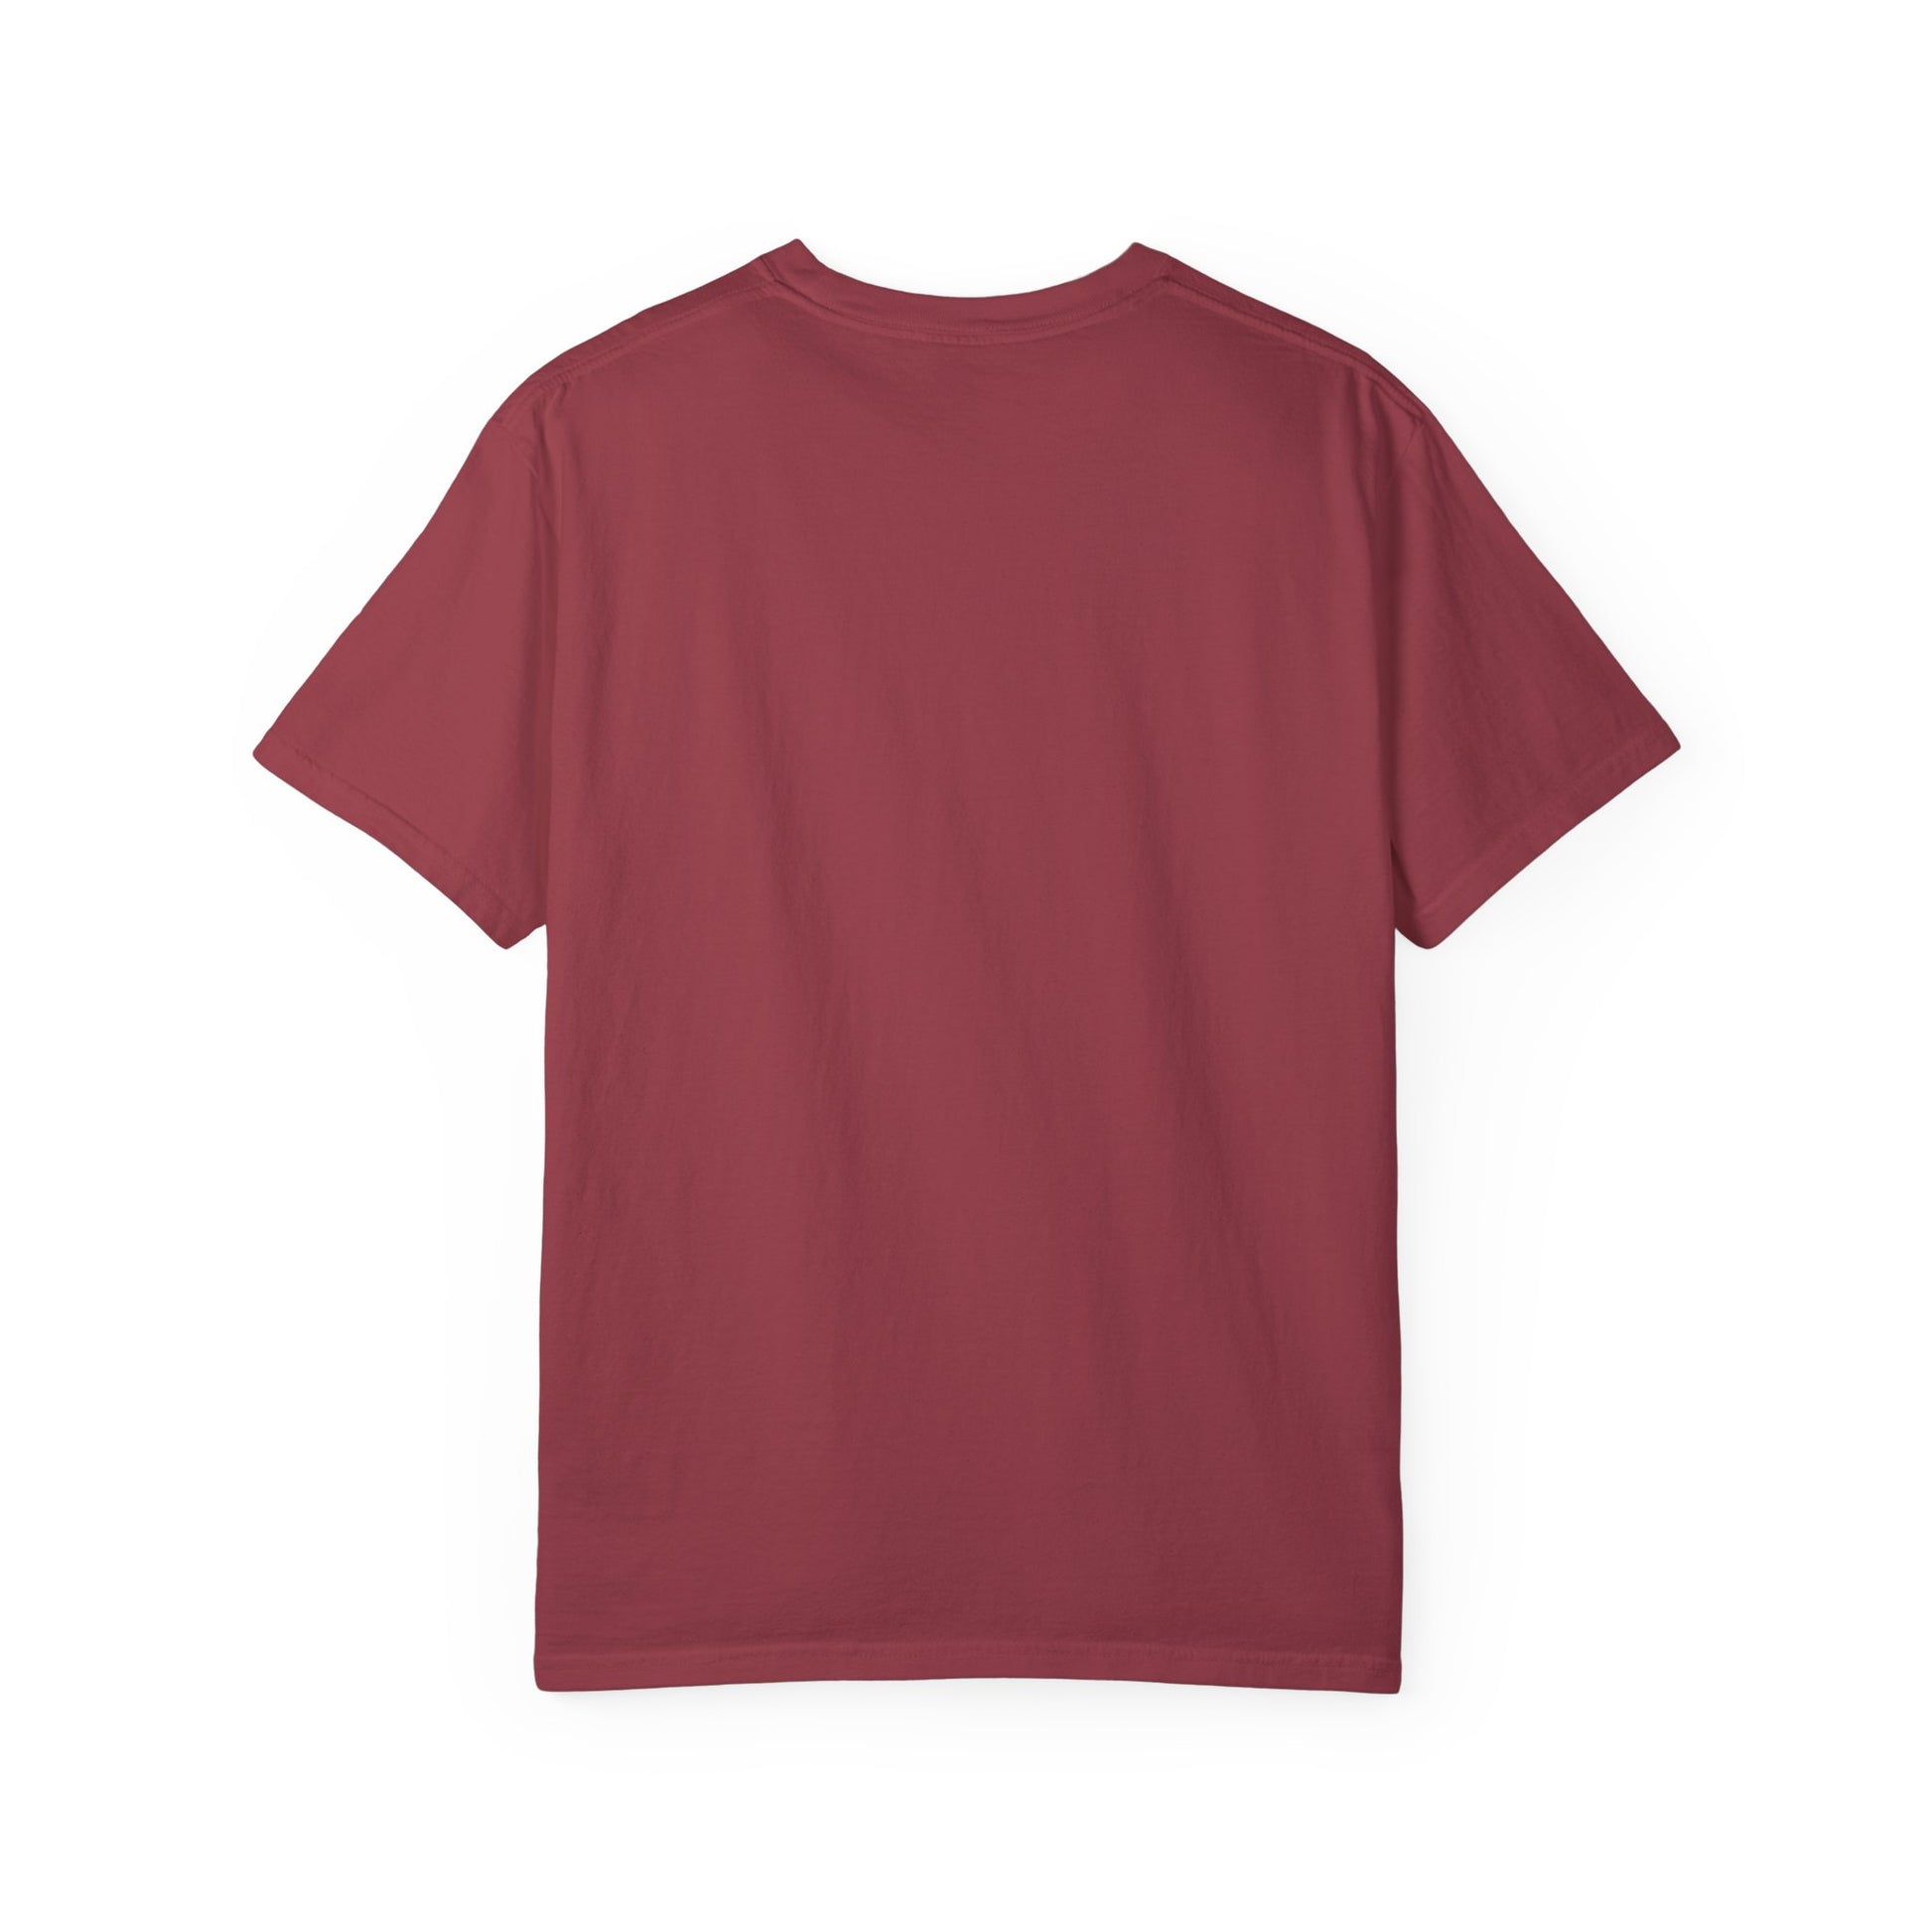 Hip Hop Teddy Bear Graphic Unisex Garment-dyed T-shirt Cotton Funny Humorous Graphic Soft Premium Unisex Men Women Chili T-shirt Birthday Gift-34